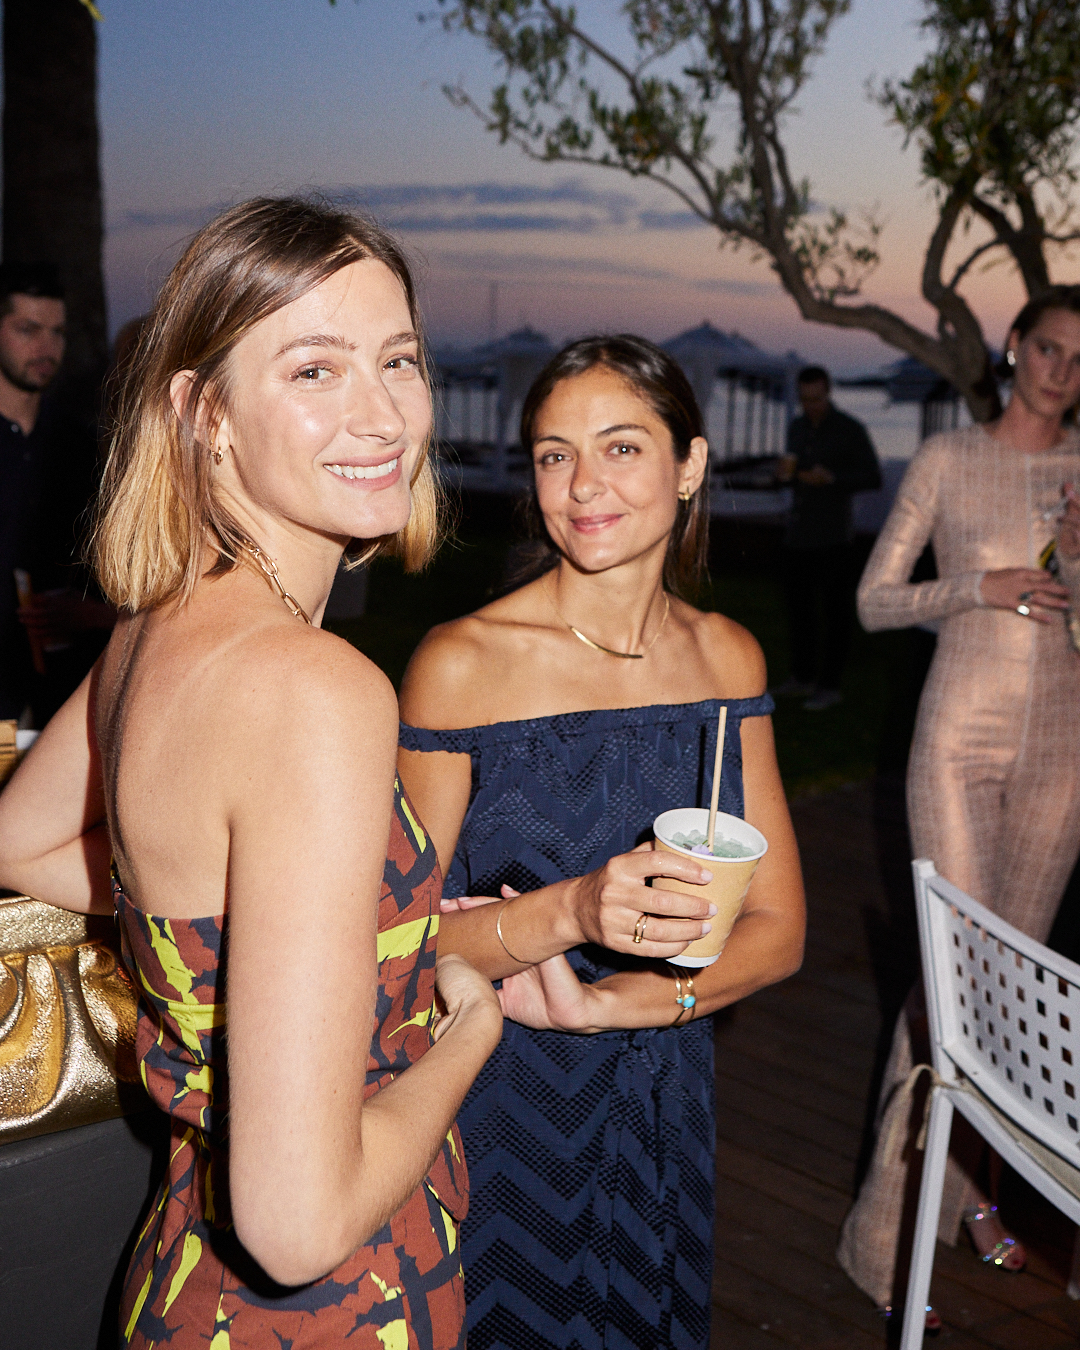 Dior & Vogue Greece Sunset Party: Οι λαμπερές εμφανίσεις στην Astir Beach-37